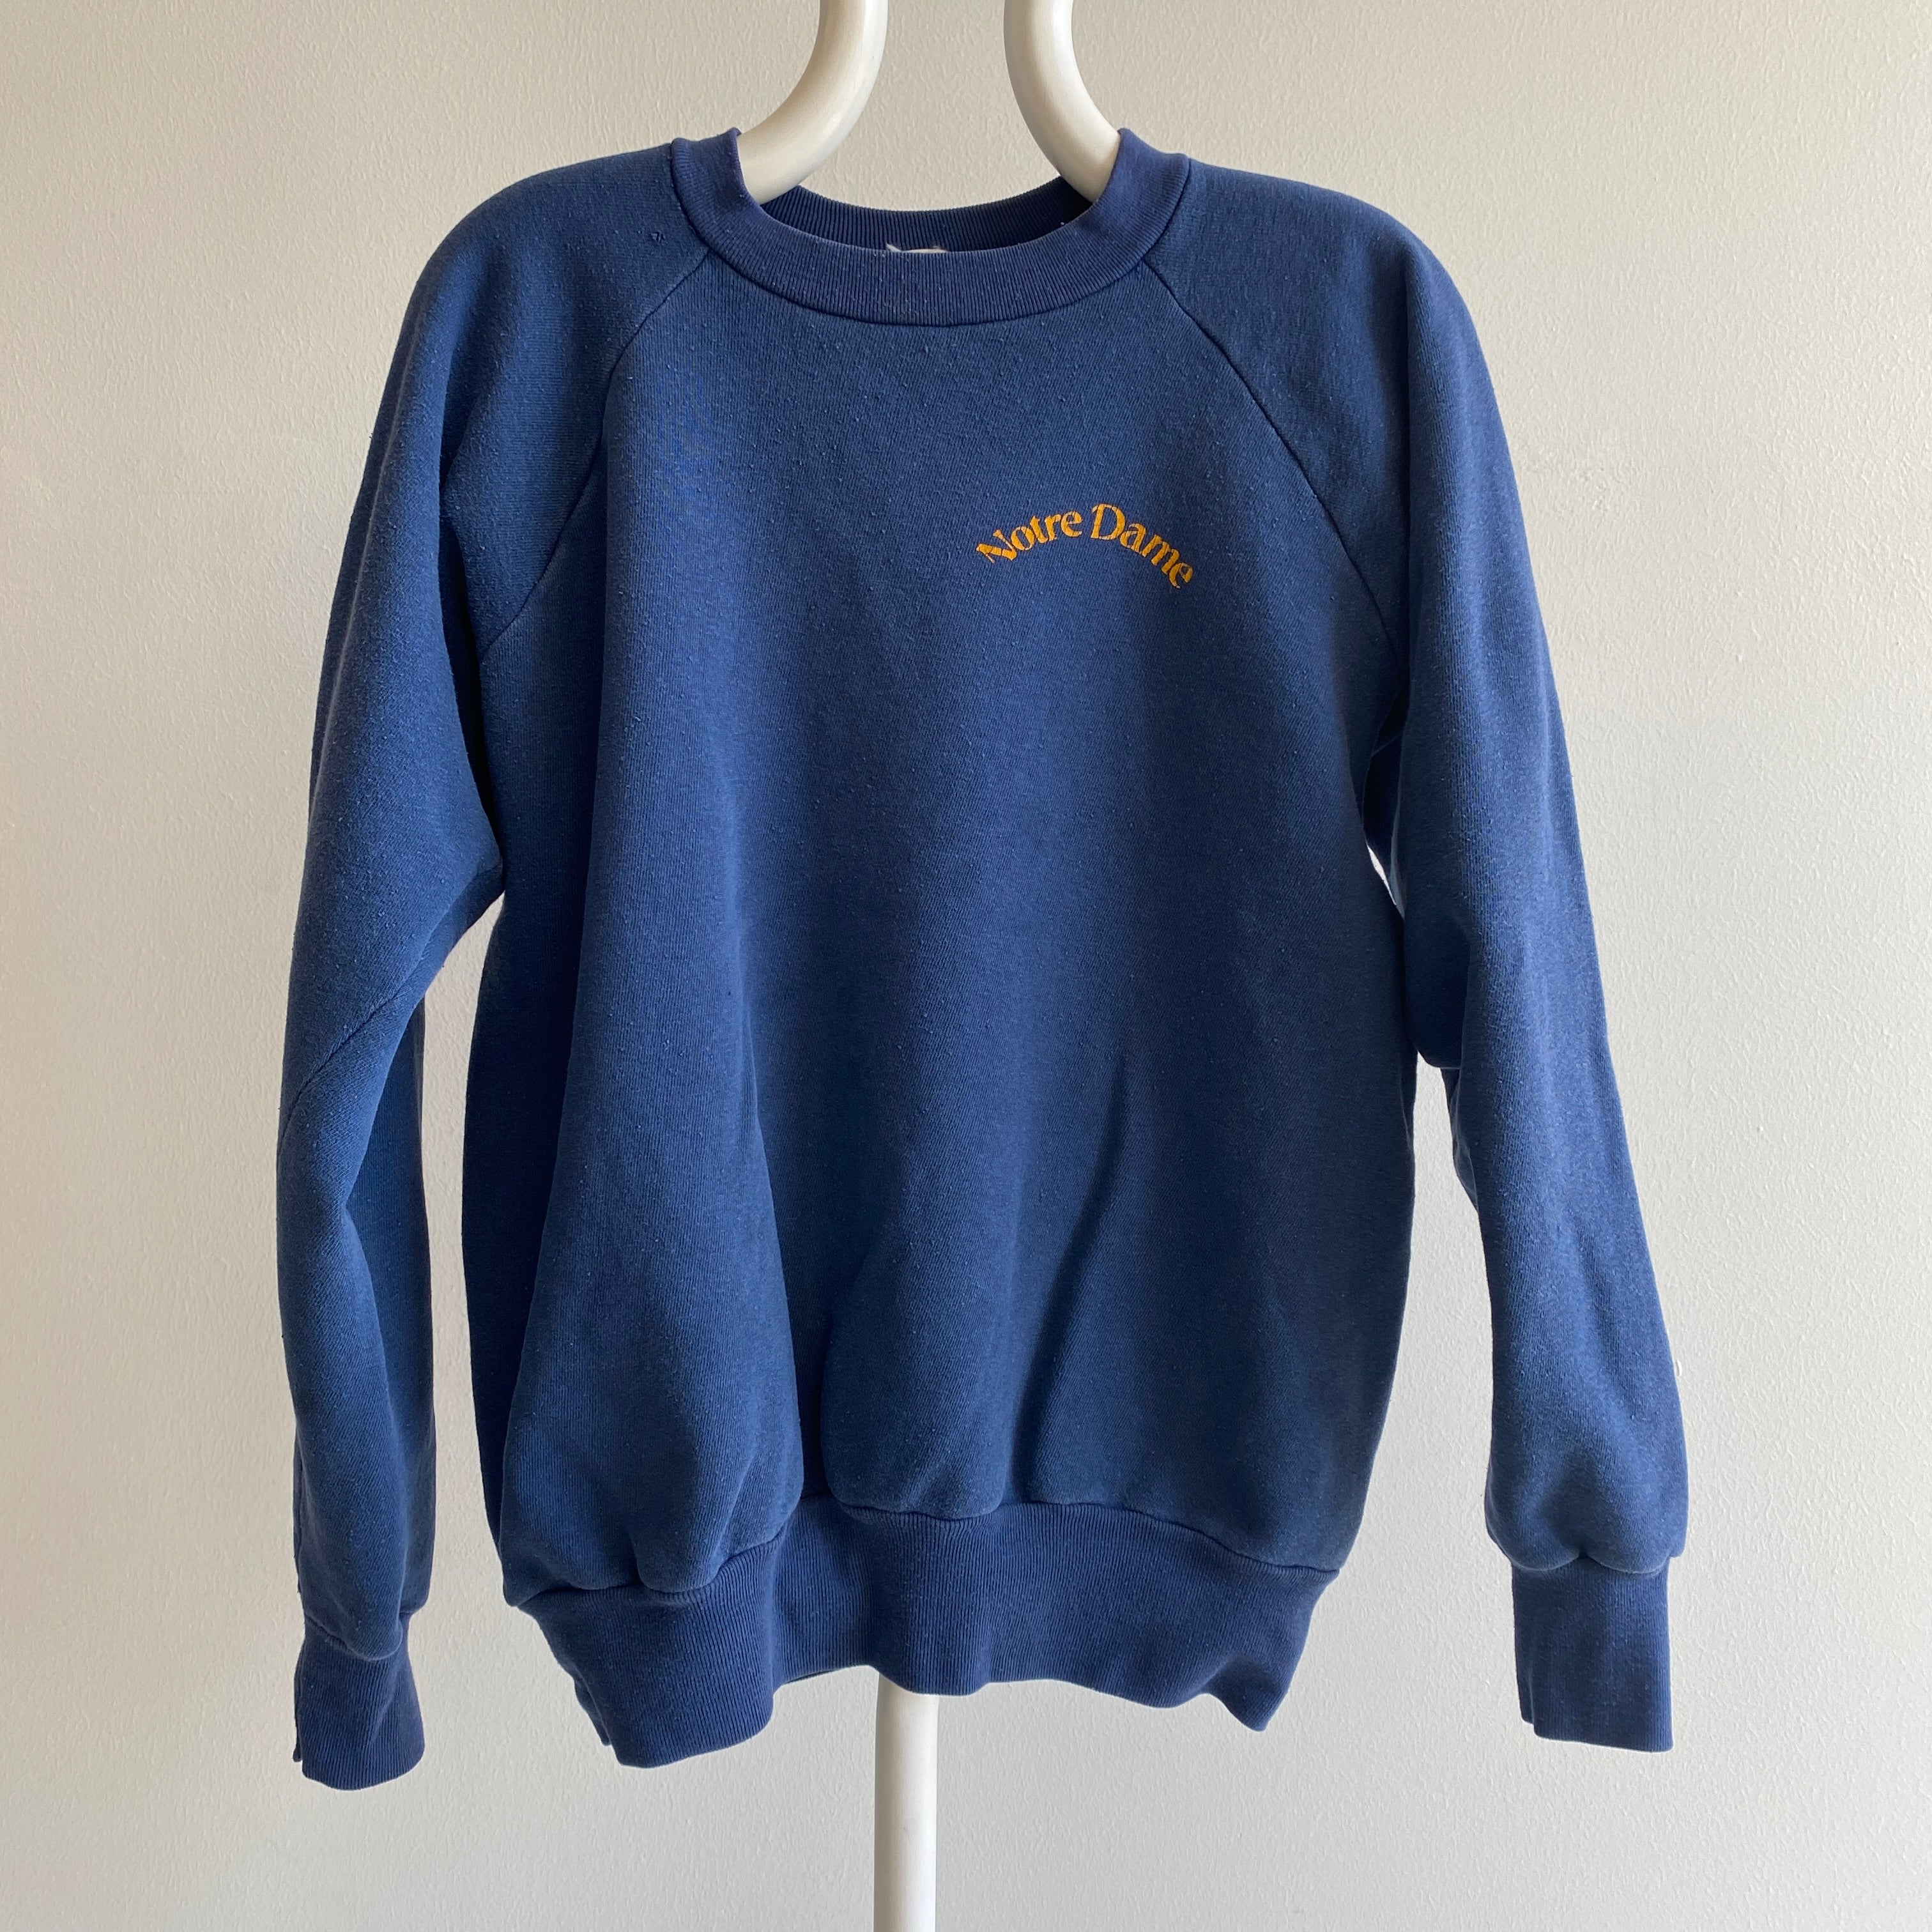 1960/70s Cotton? Notre Dame Sweatshirt